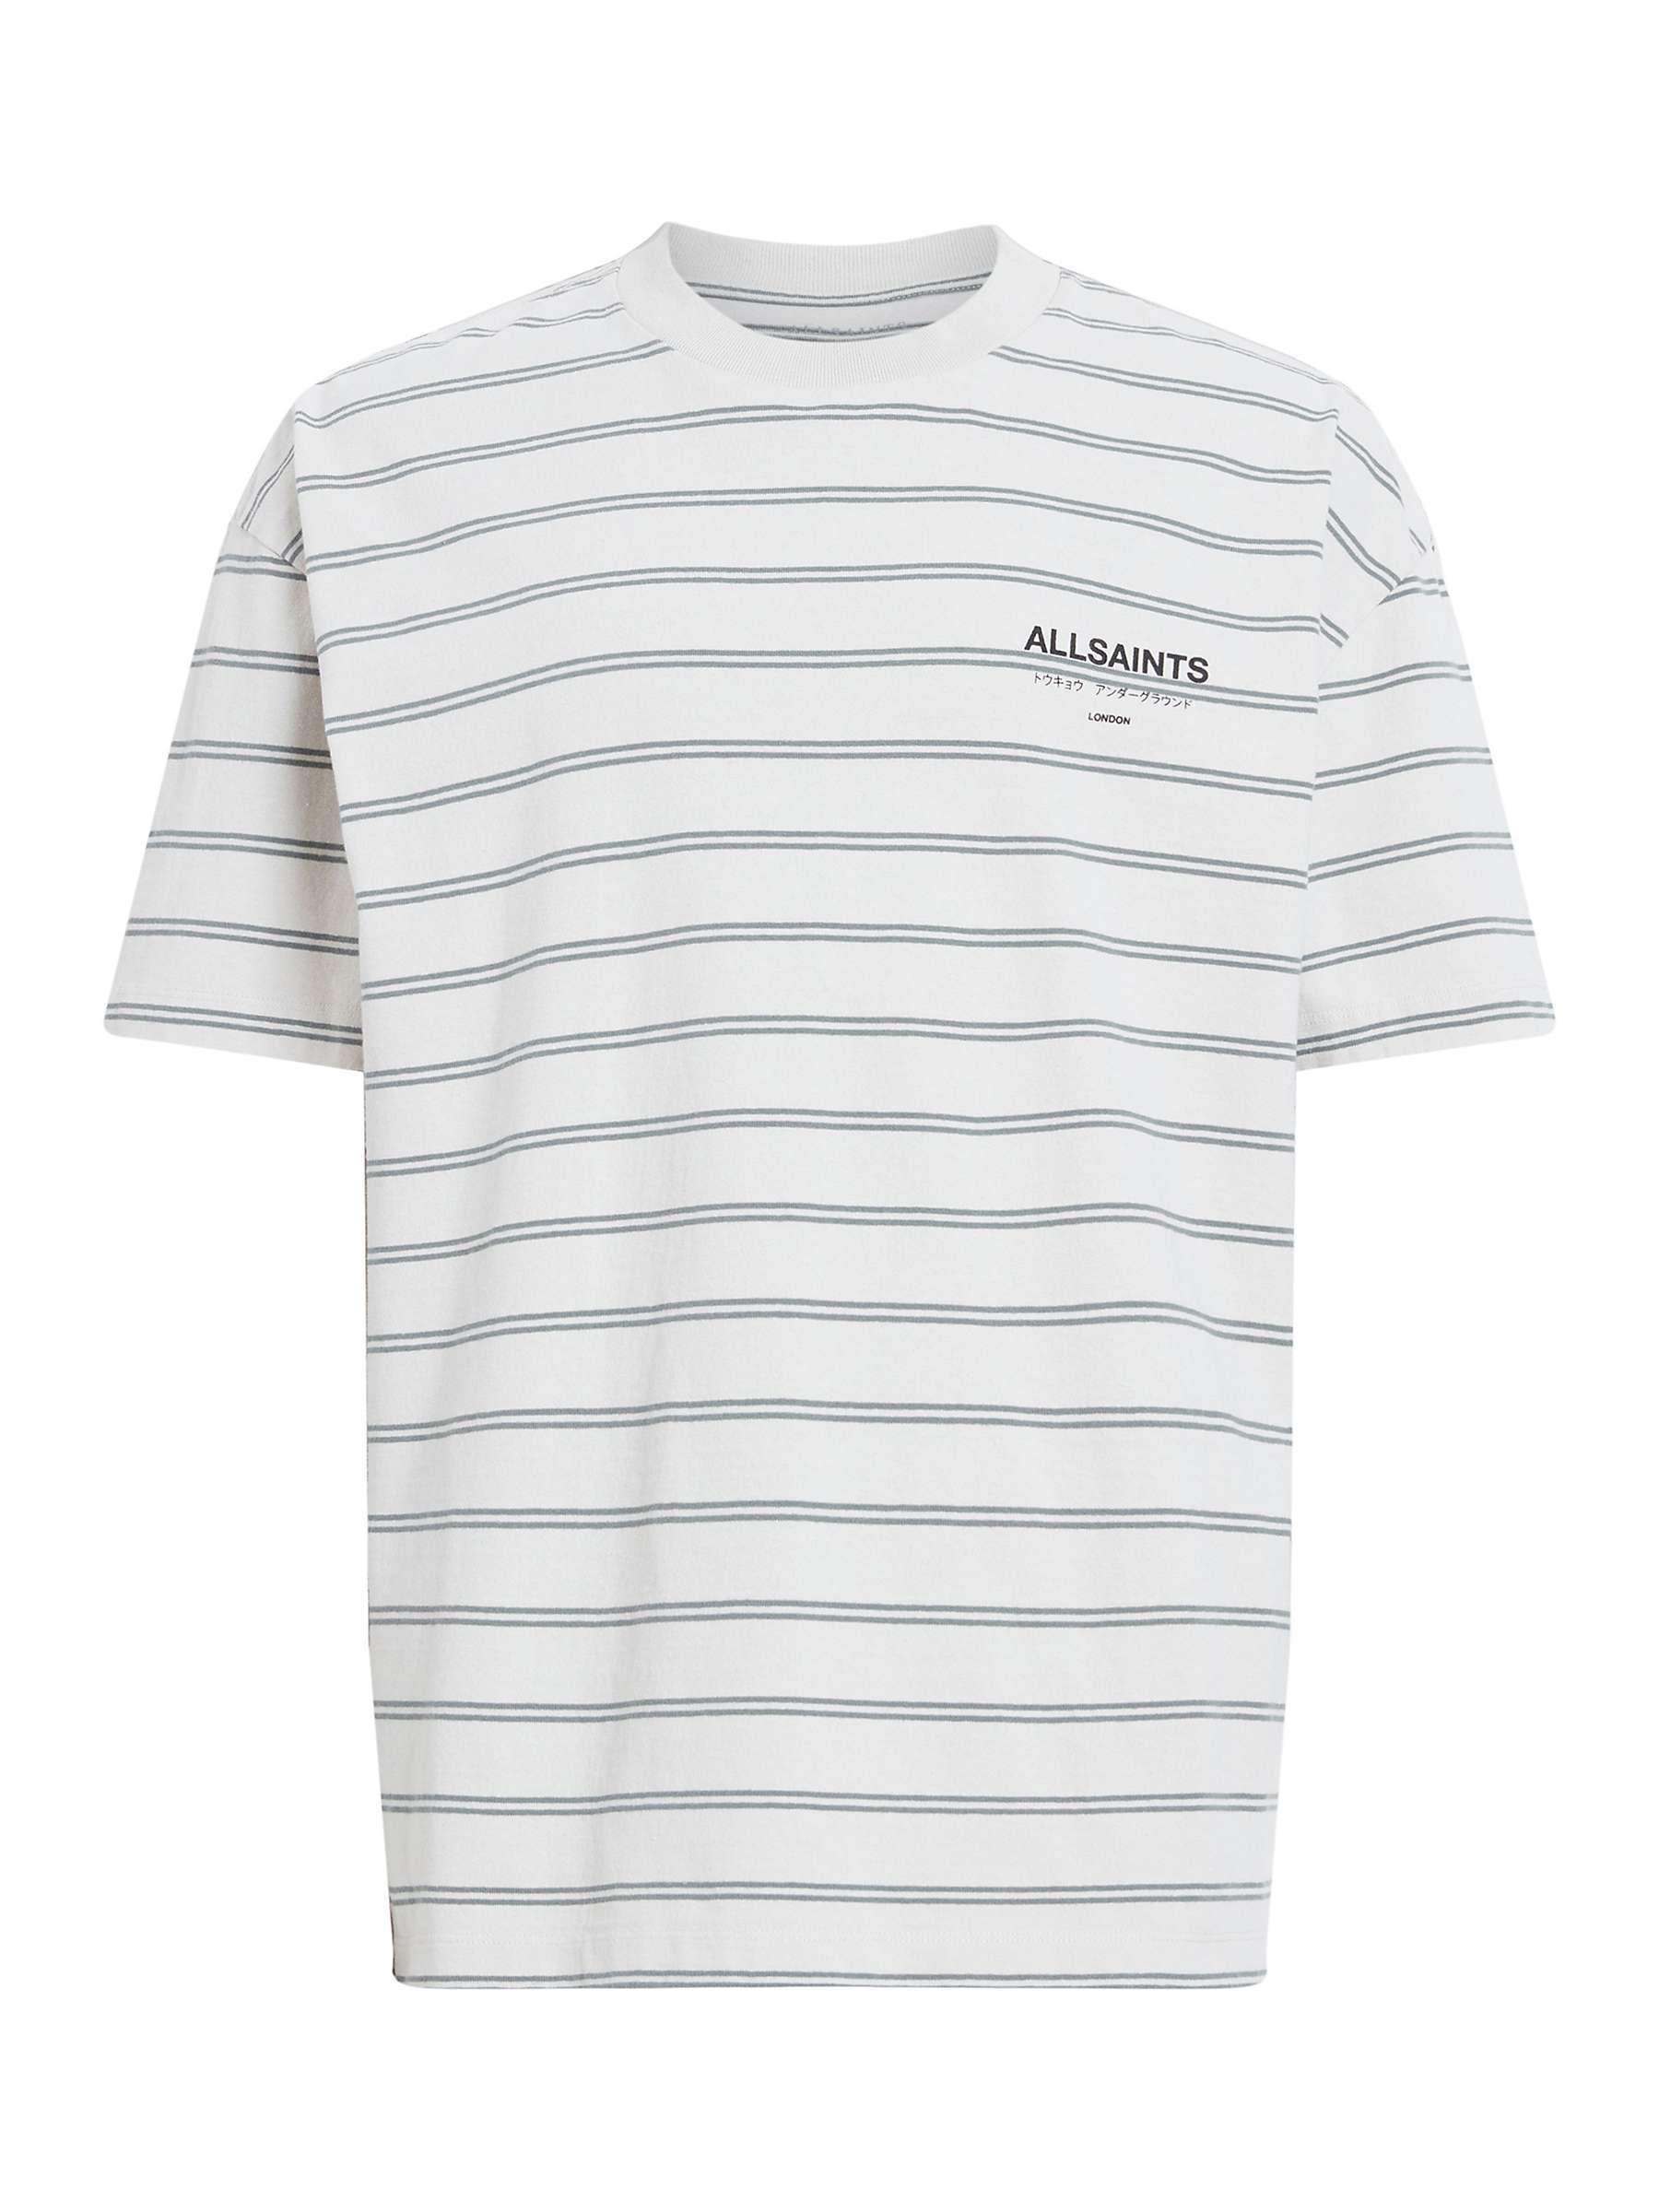 Buy AllSaints Underground Stripe T-Shirt, Grey/Multi Online at johnlewis.com